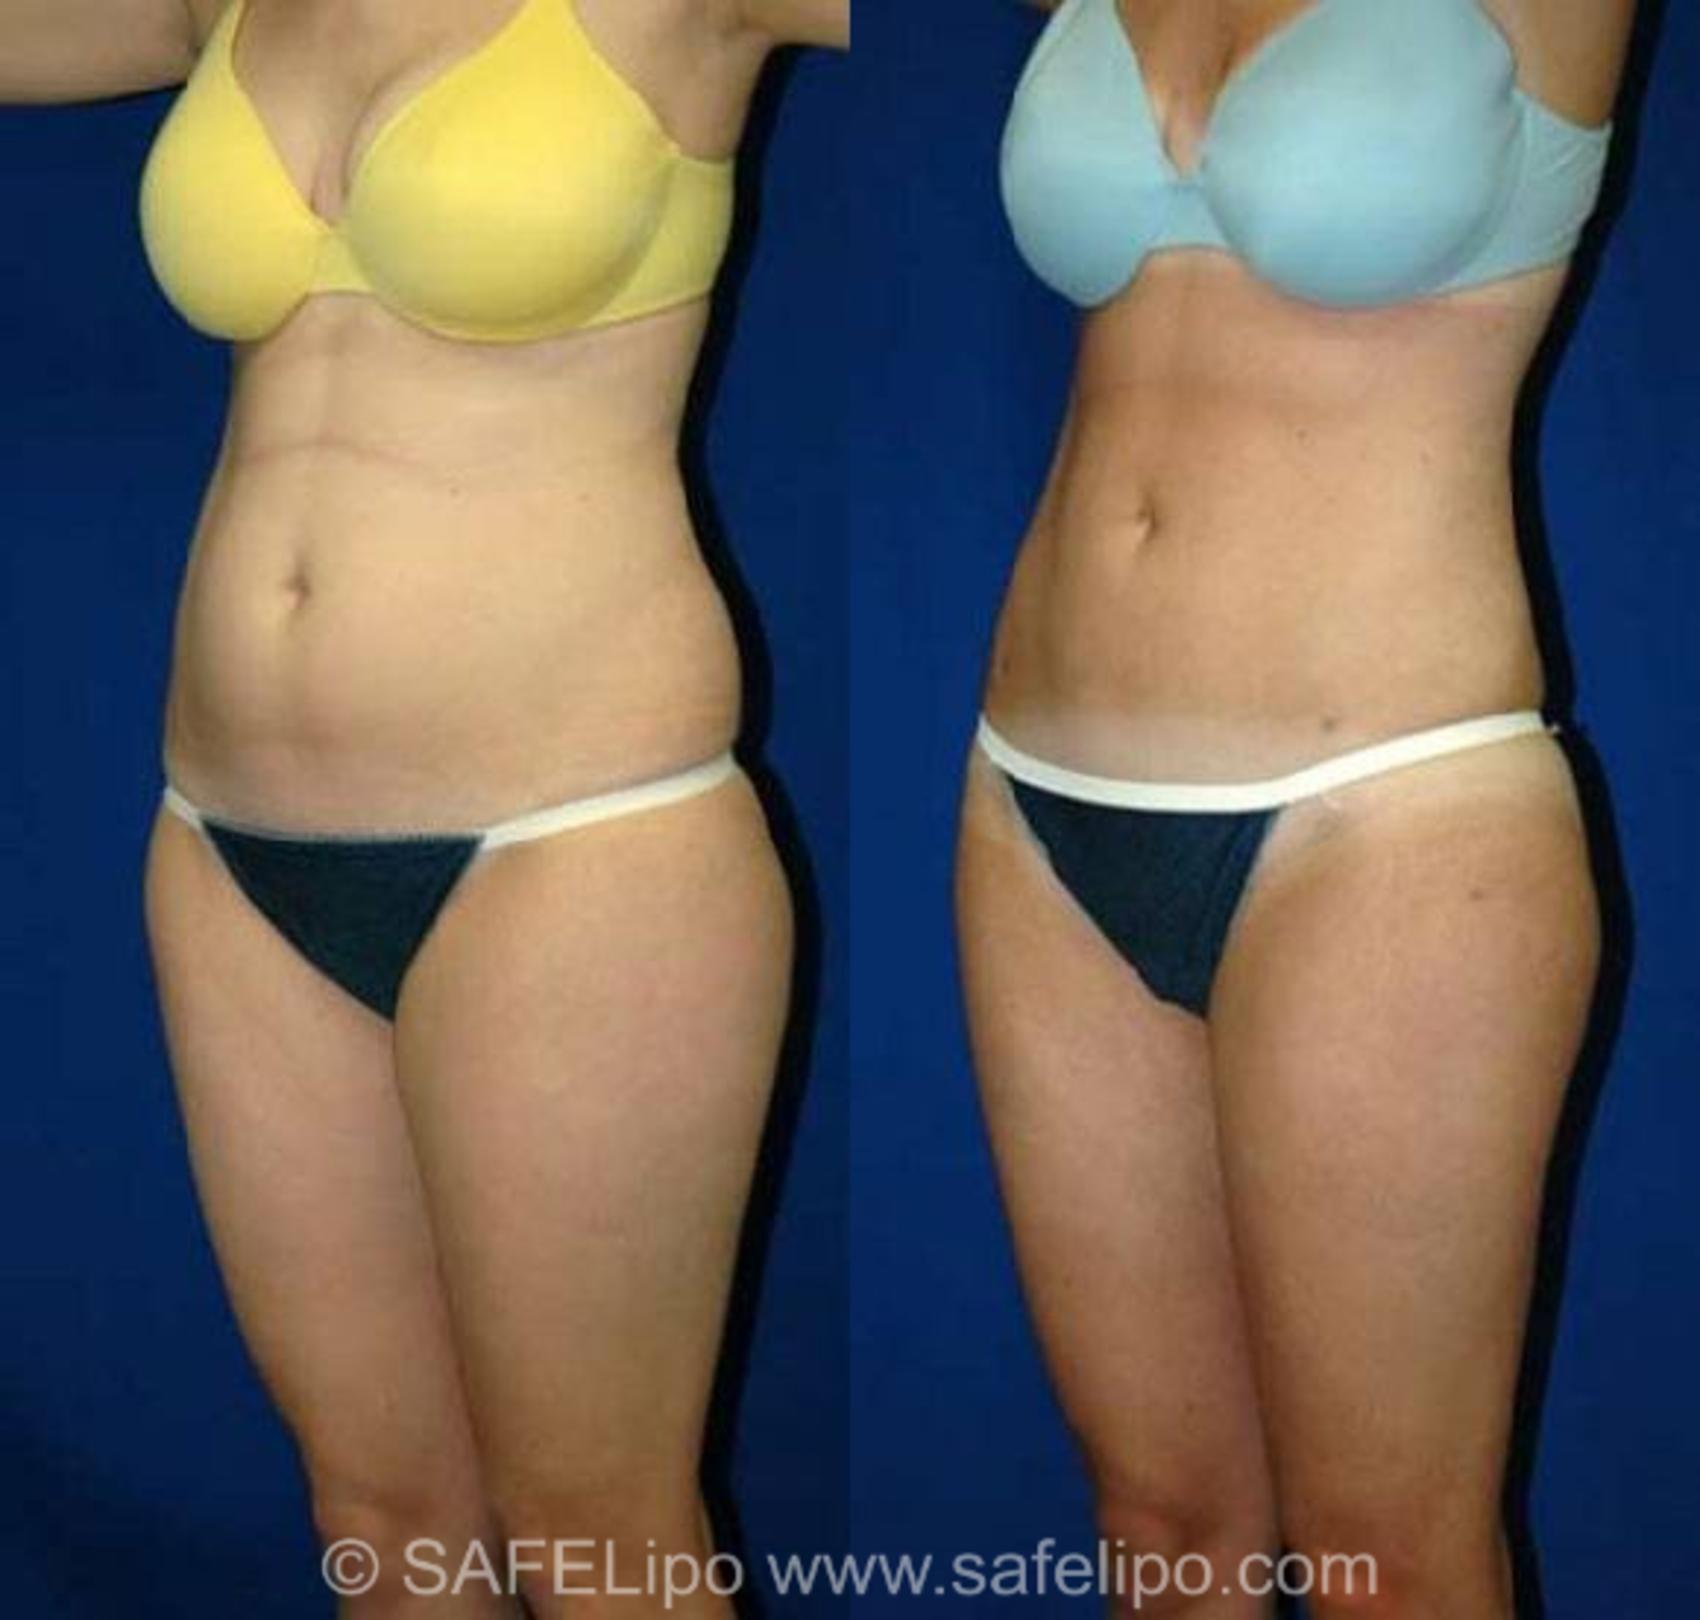 SAFELipoHD® Case 141 Before & After View #2 | SAFELipo®